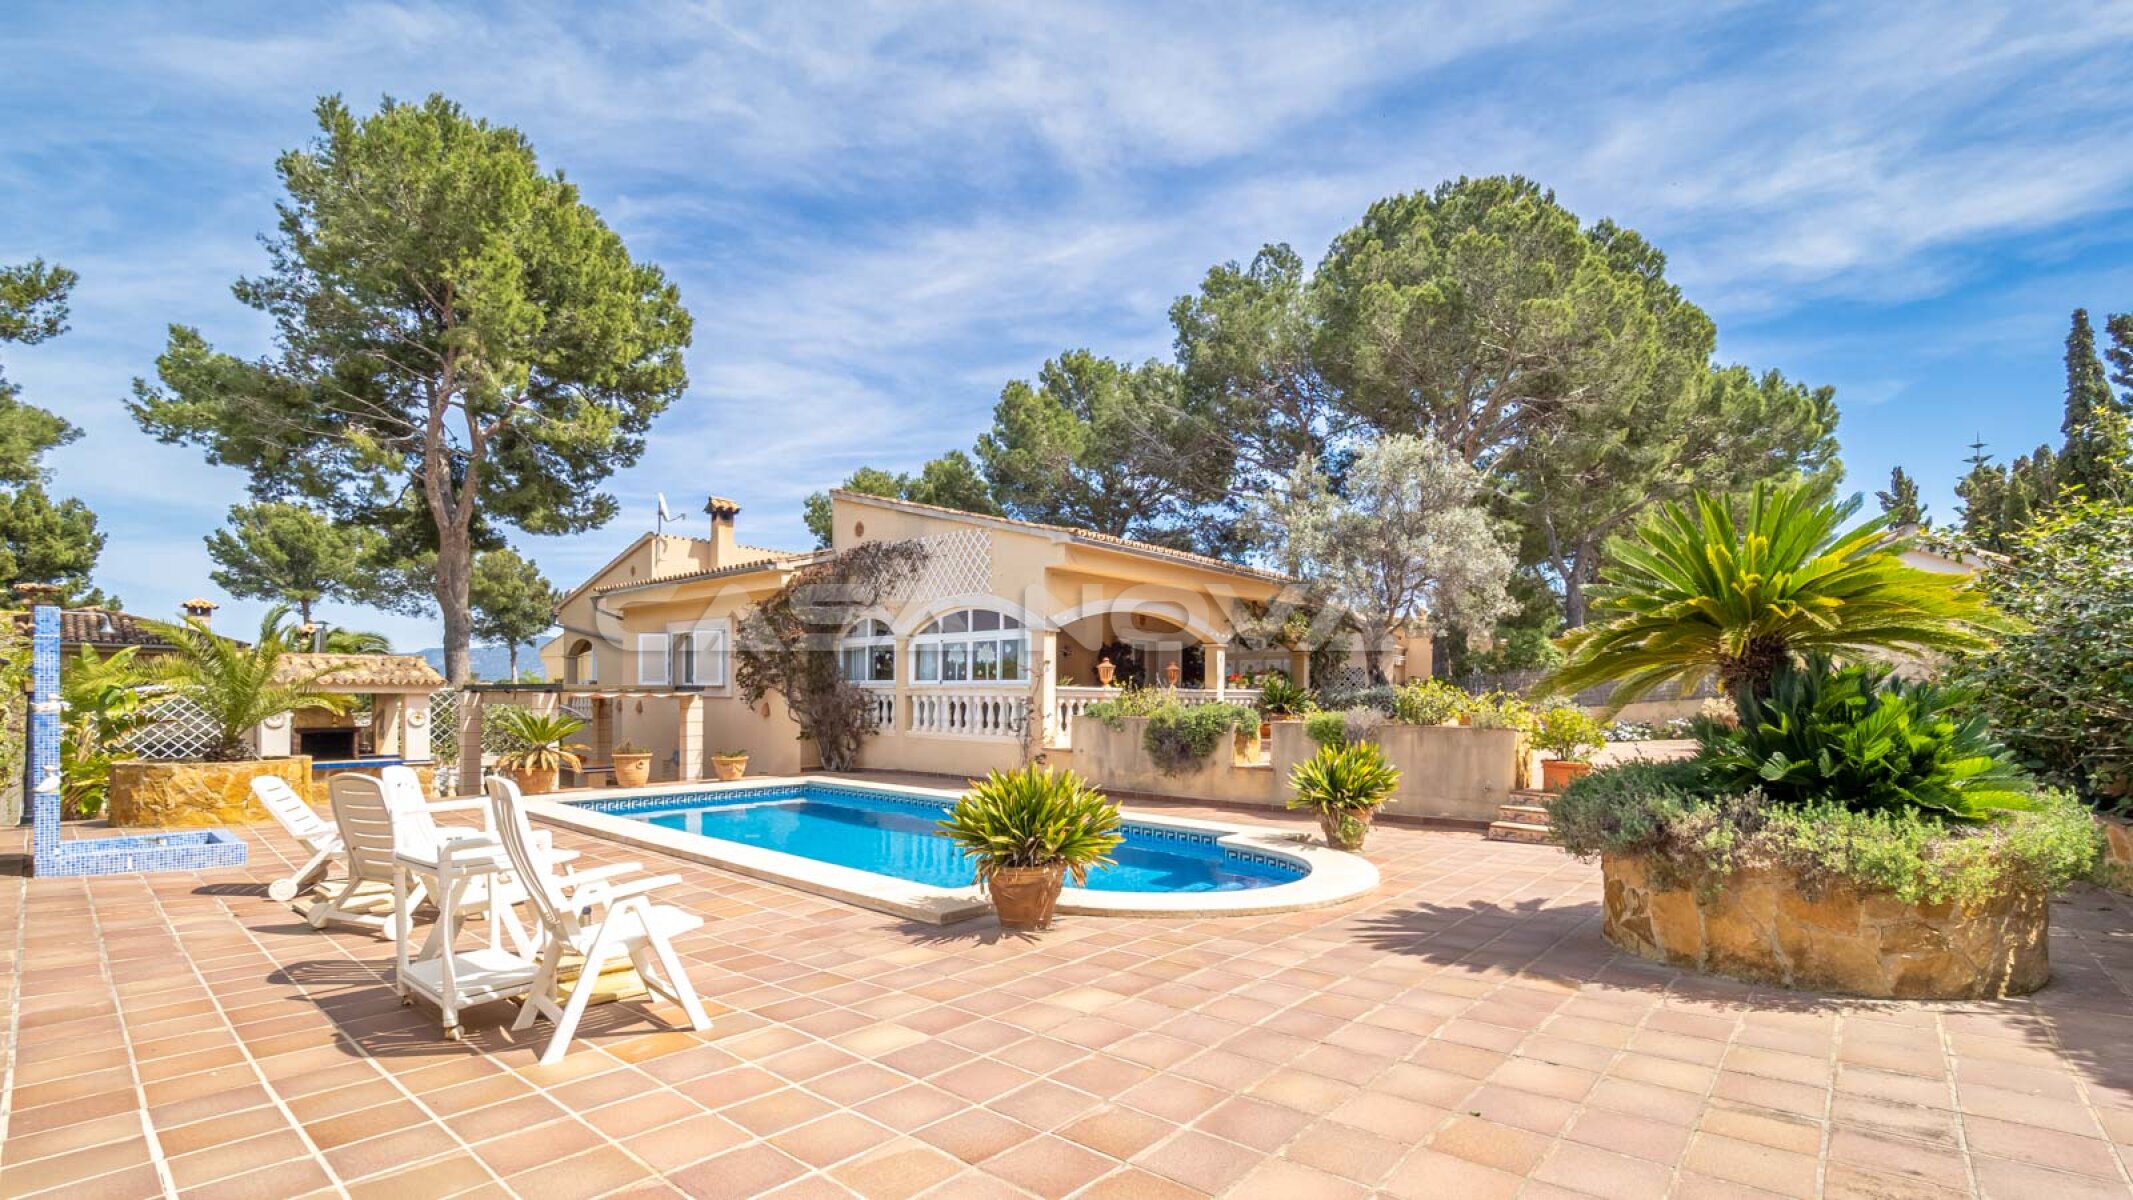 Lovely villa Mallorca in very popular residential area